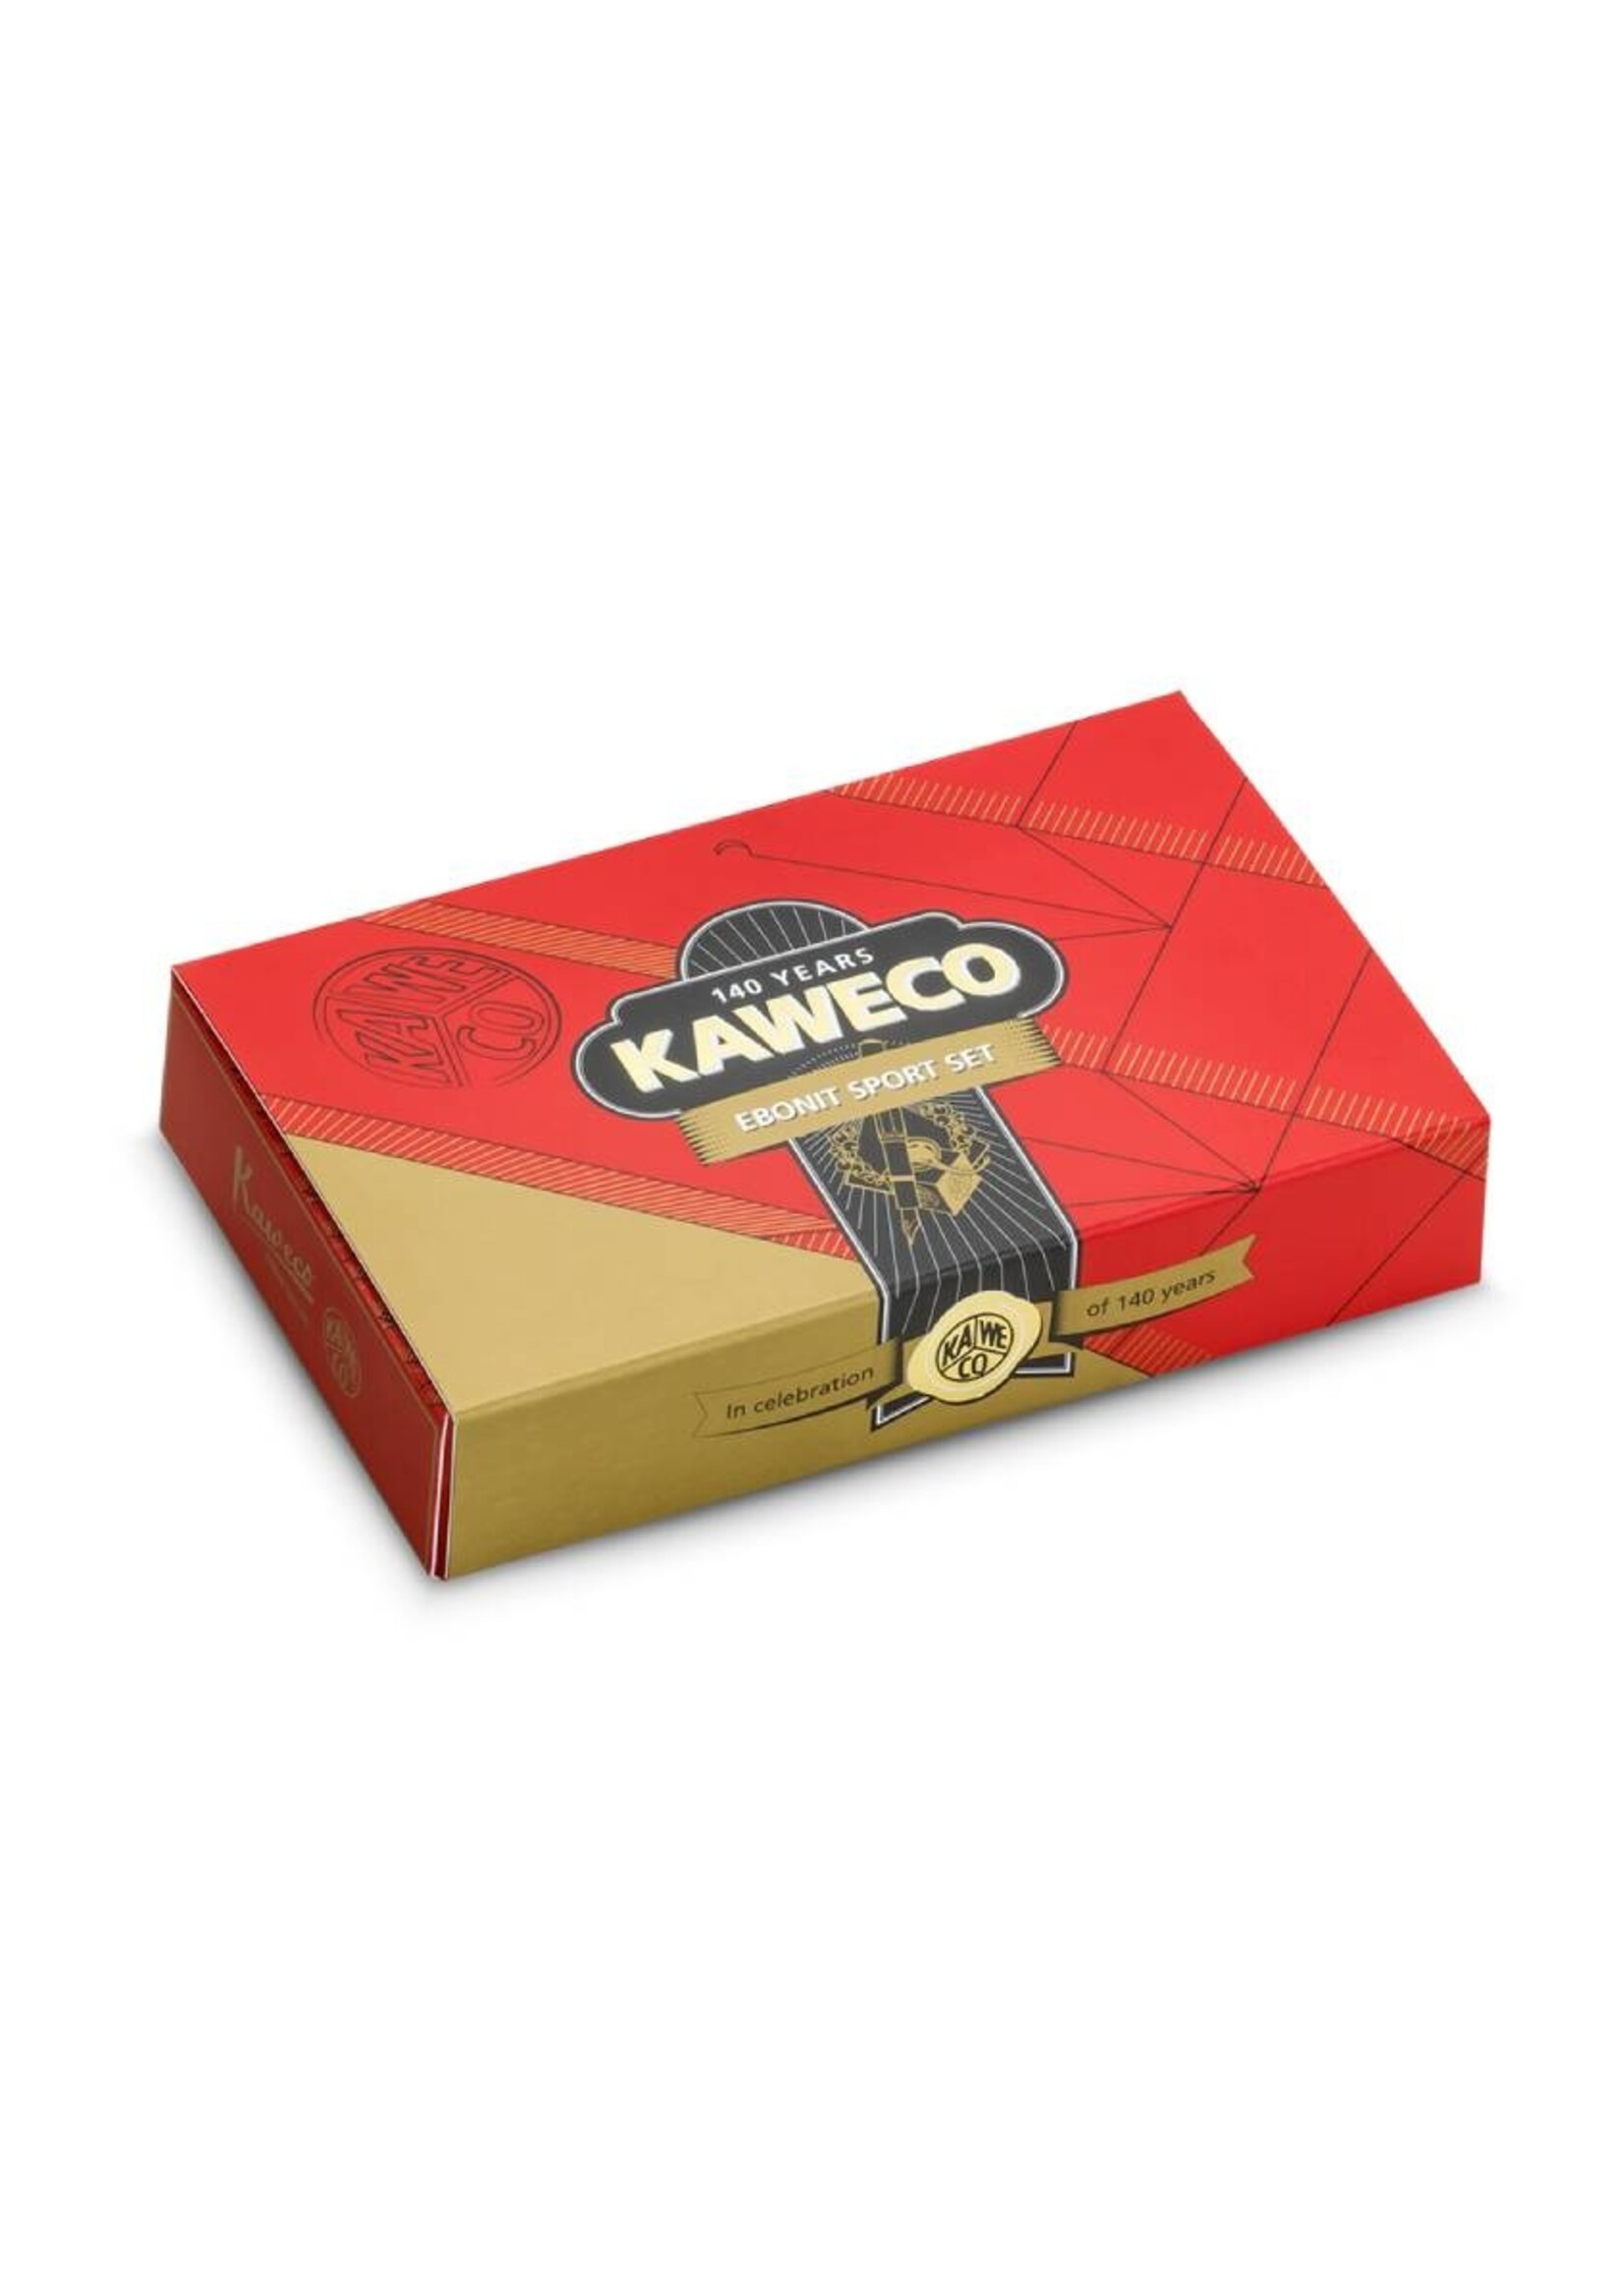 Kaweco 140 YEARS Sport Ebonite Gift Box  Vulpen